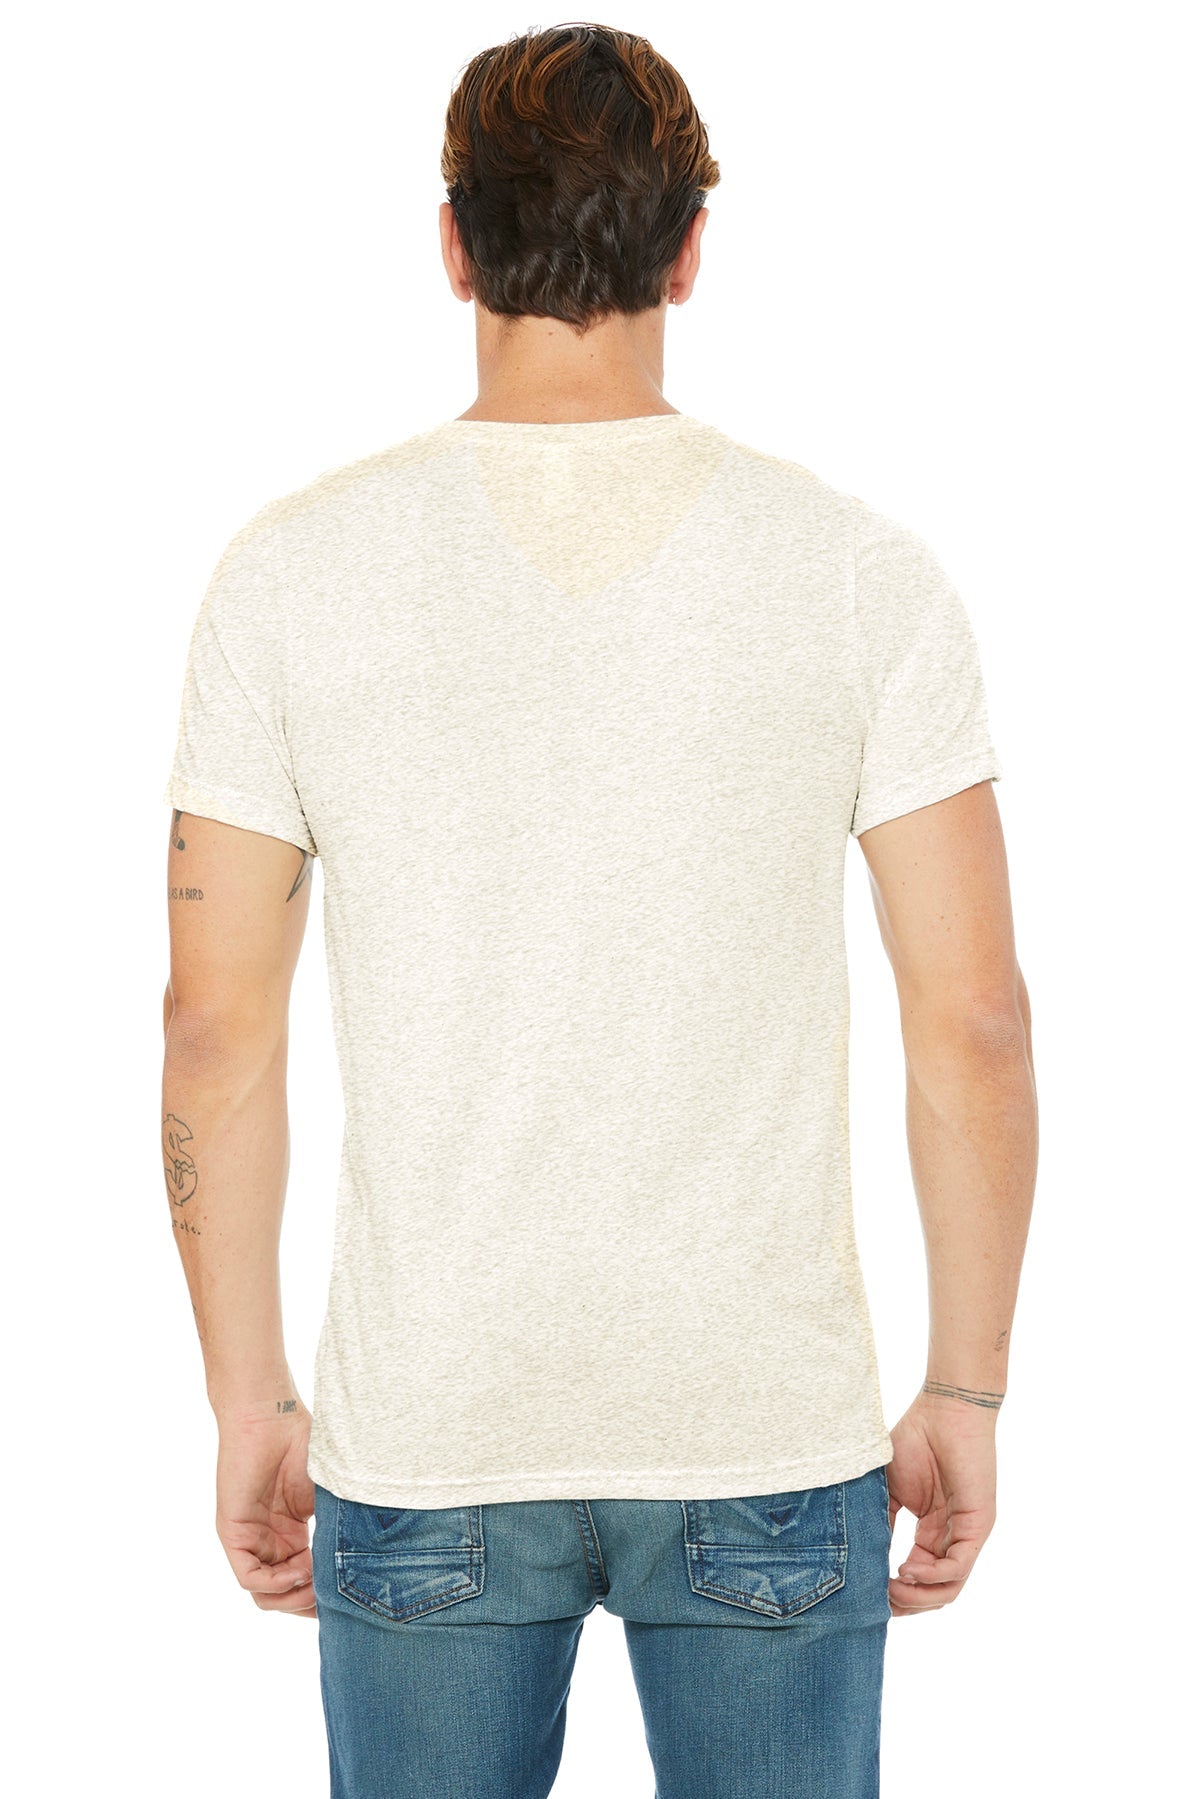 bella + canvas unisex triblend short sleeve v-neck t-shirt 3415c oatmeal triblend